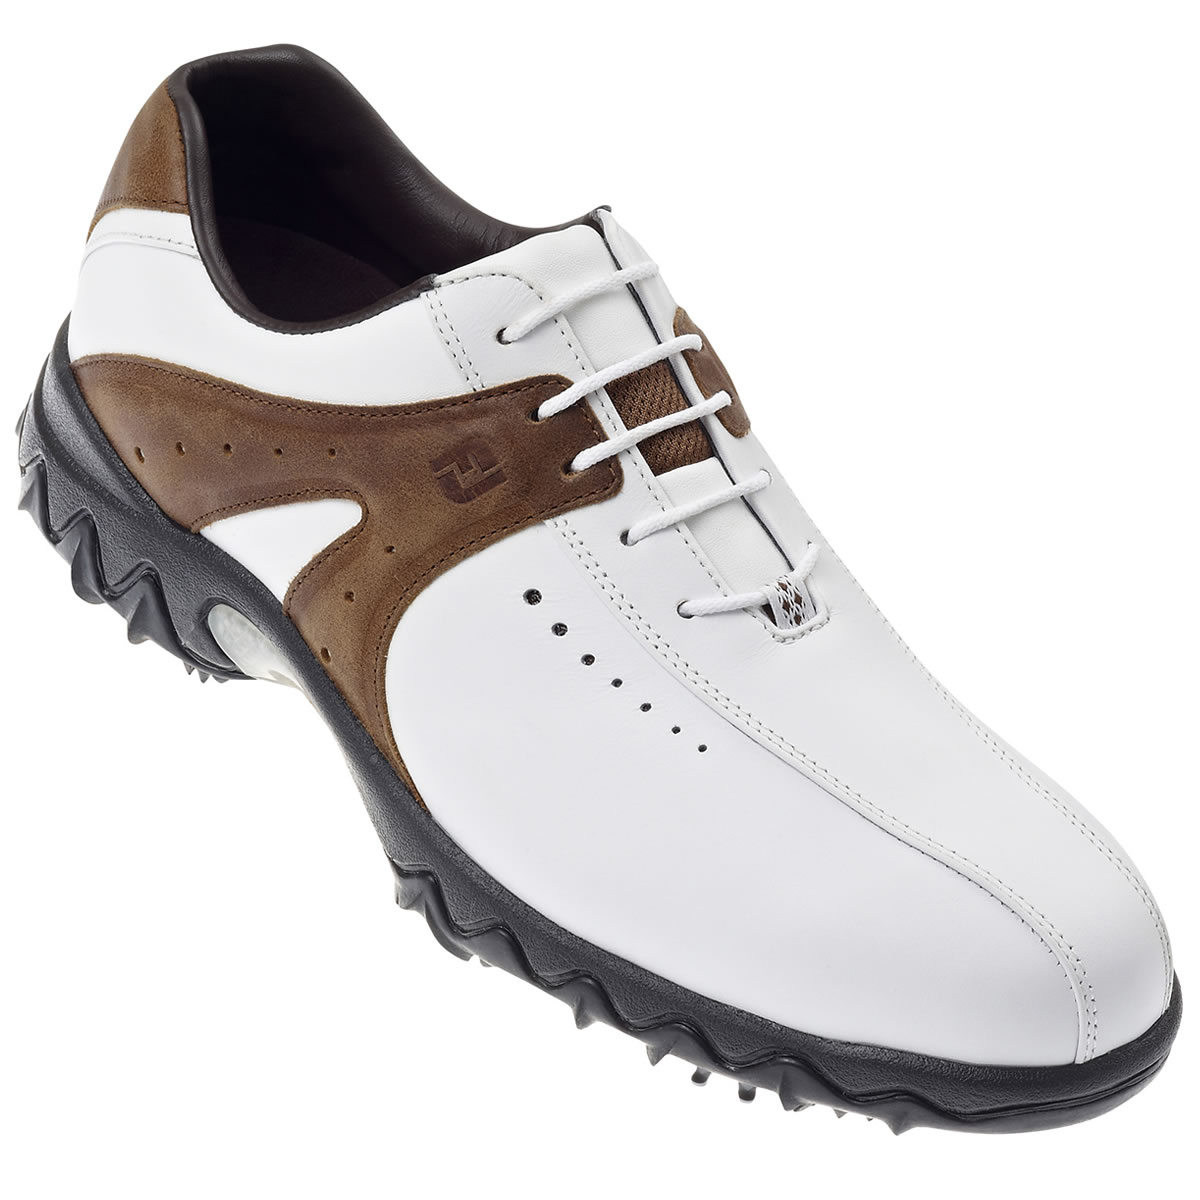 FootJoy Contour Golf Shoes White/Brown #54163